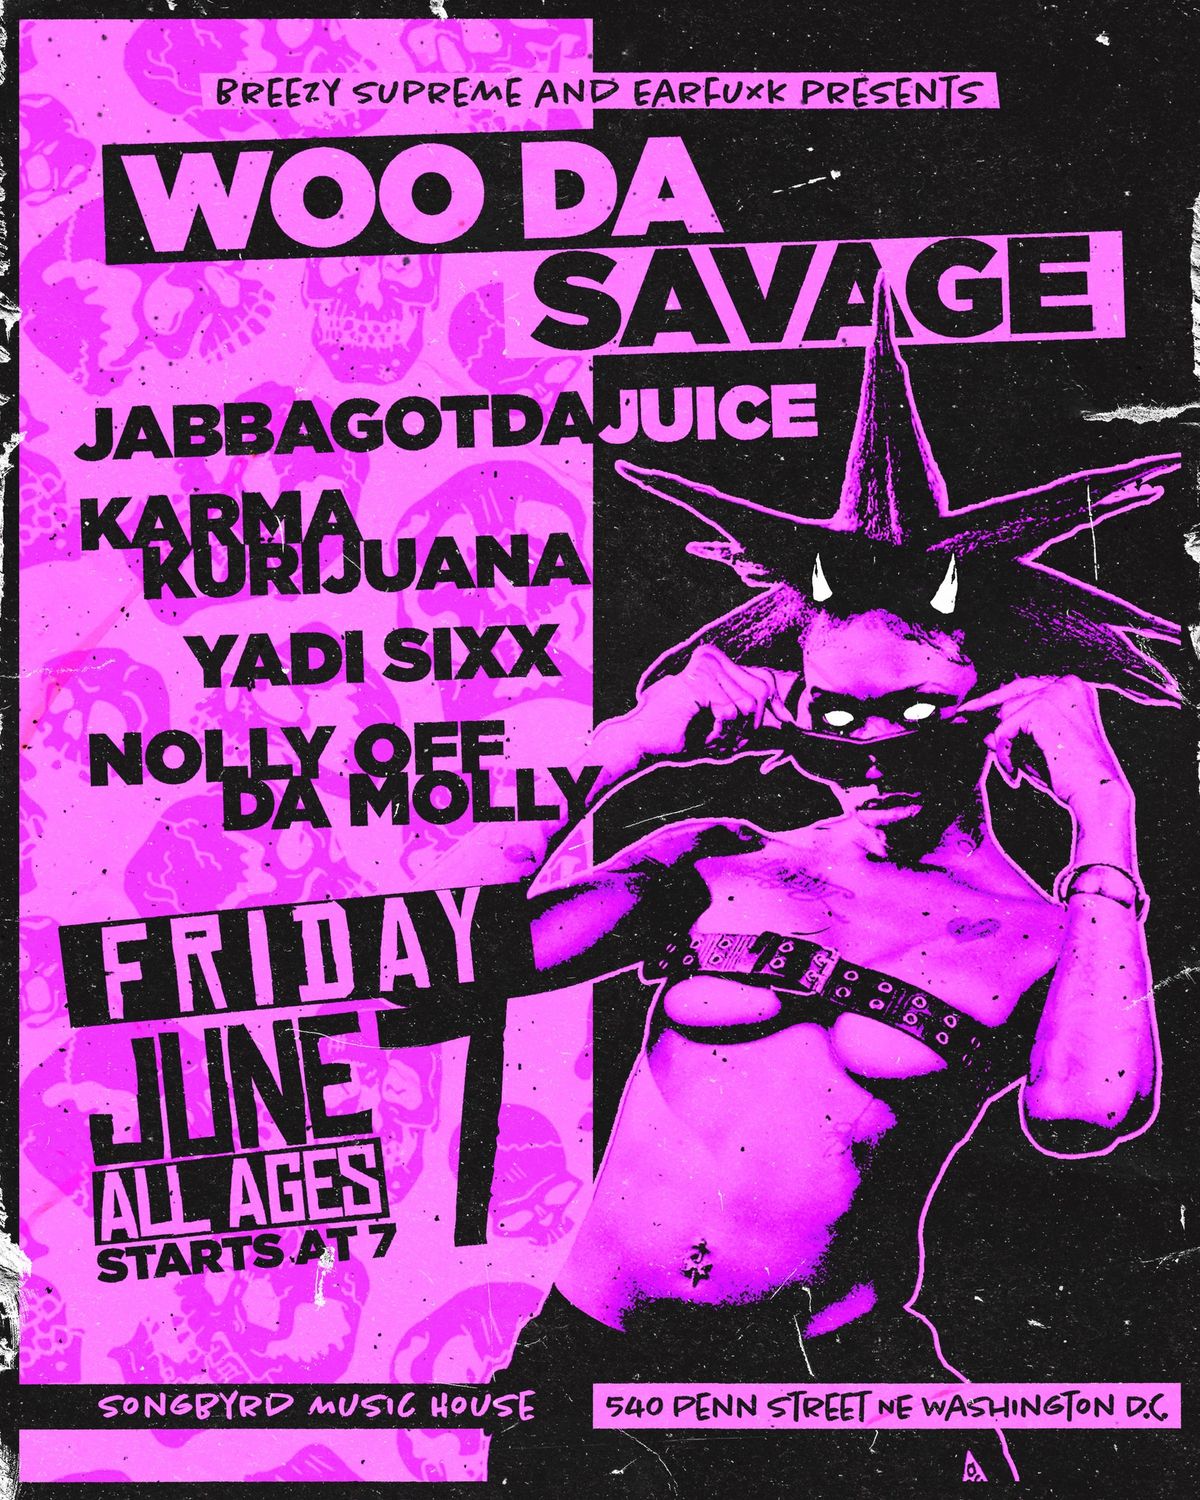 Breezy Supreme and Earfxck presents: Woo Da Savage at Songbyrd DC